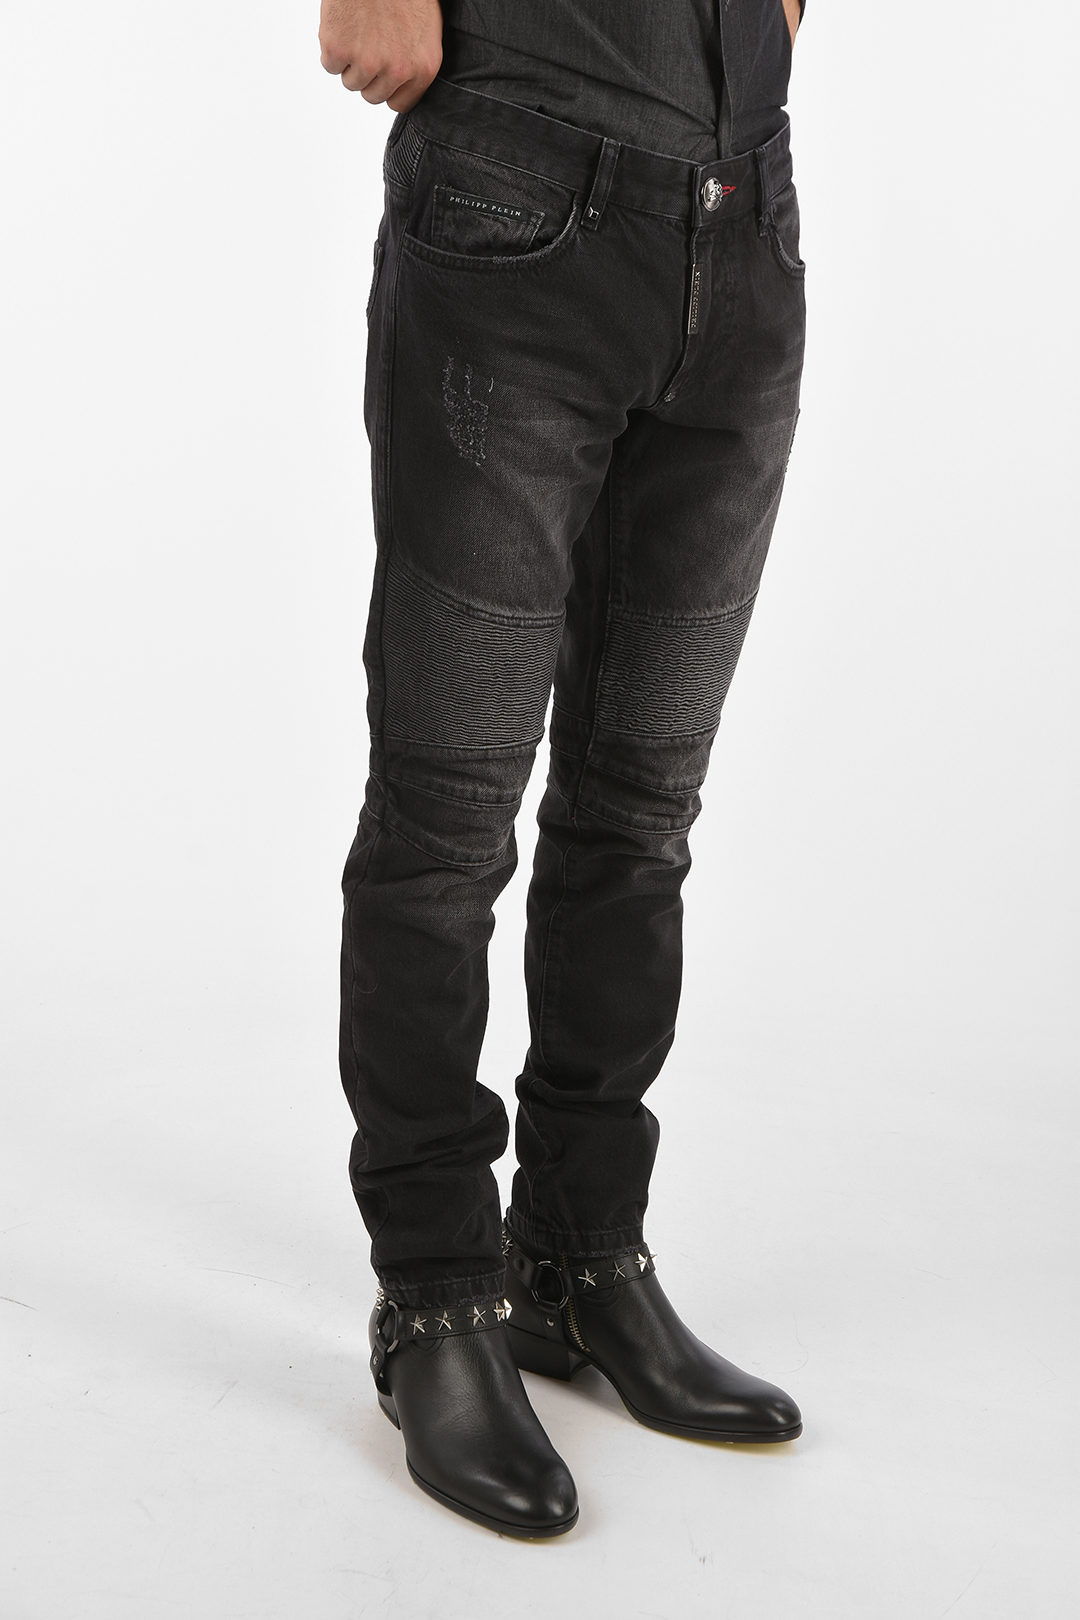 Peuter Relatie Wrijven Philipp Plein 15cm straight cut biker SOME NIGHTS jeans men - Glamood Outlet